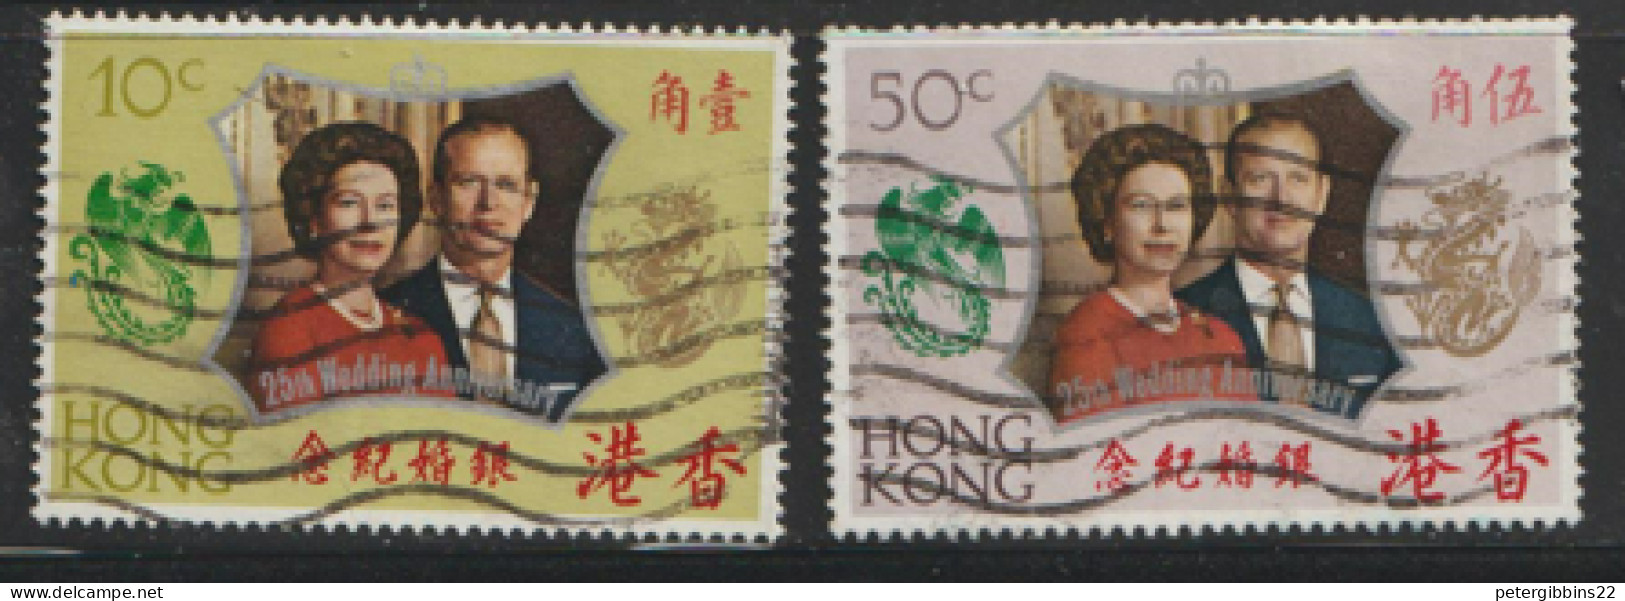 Hong Kong  1972 SG  297-80  Silver Wedding    Fine Used   - Gebruikt